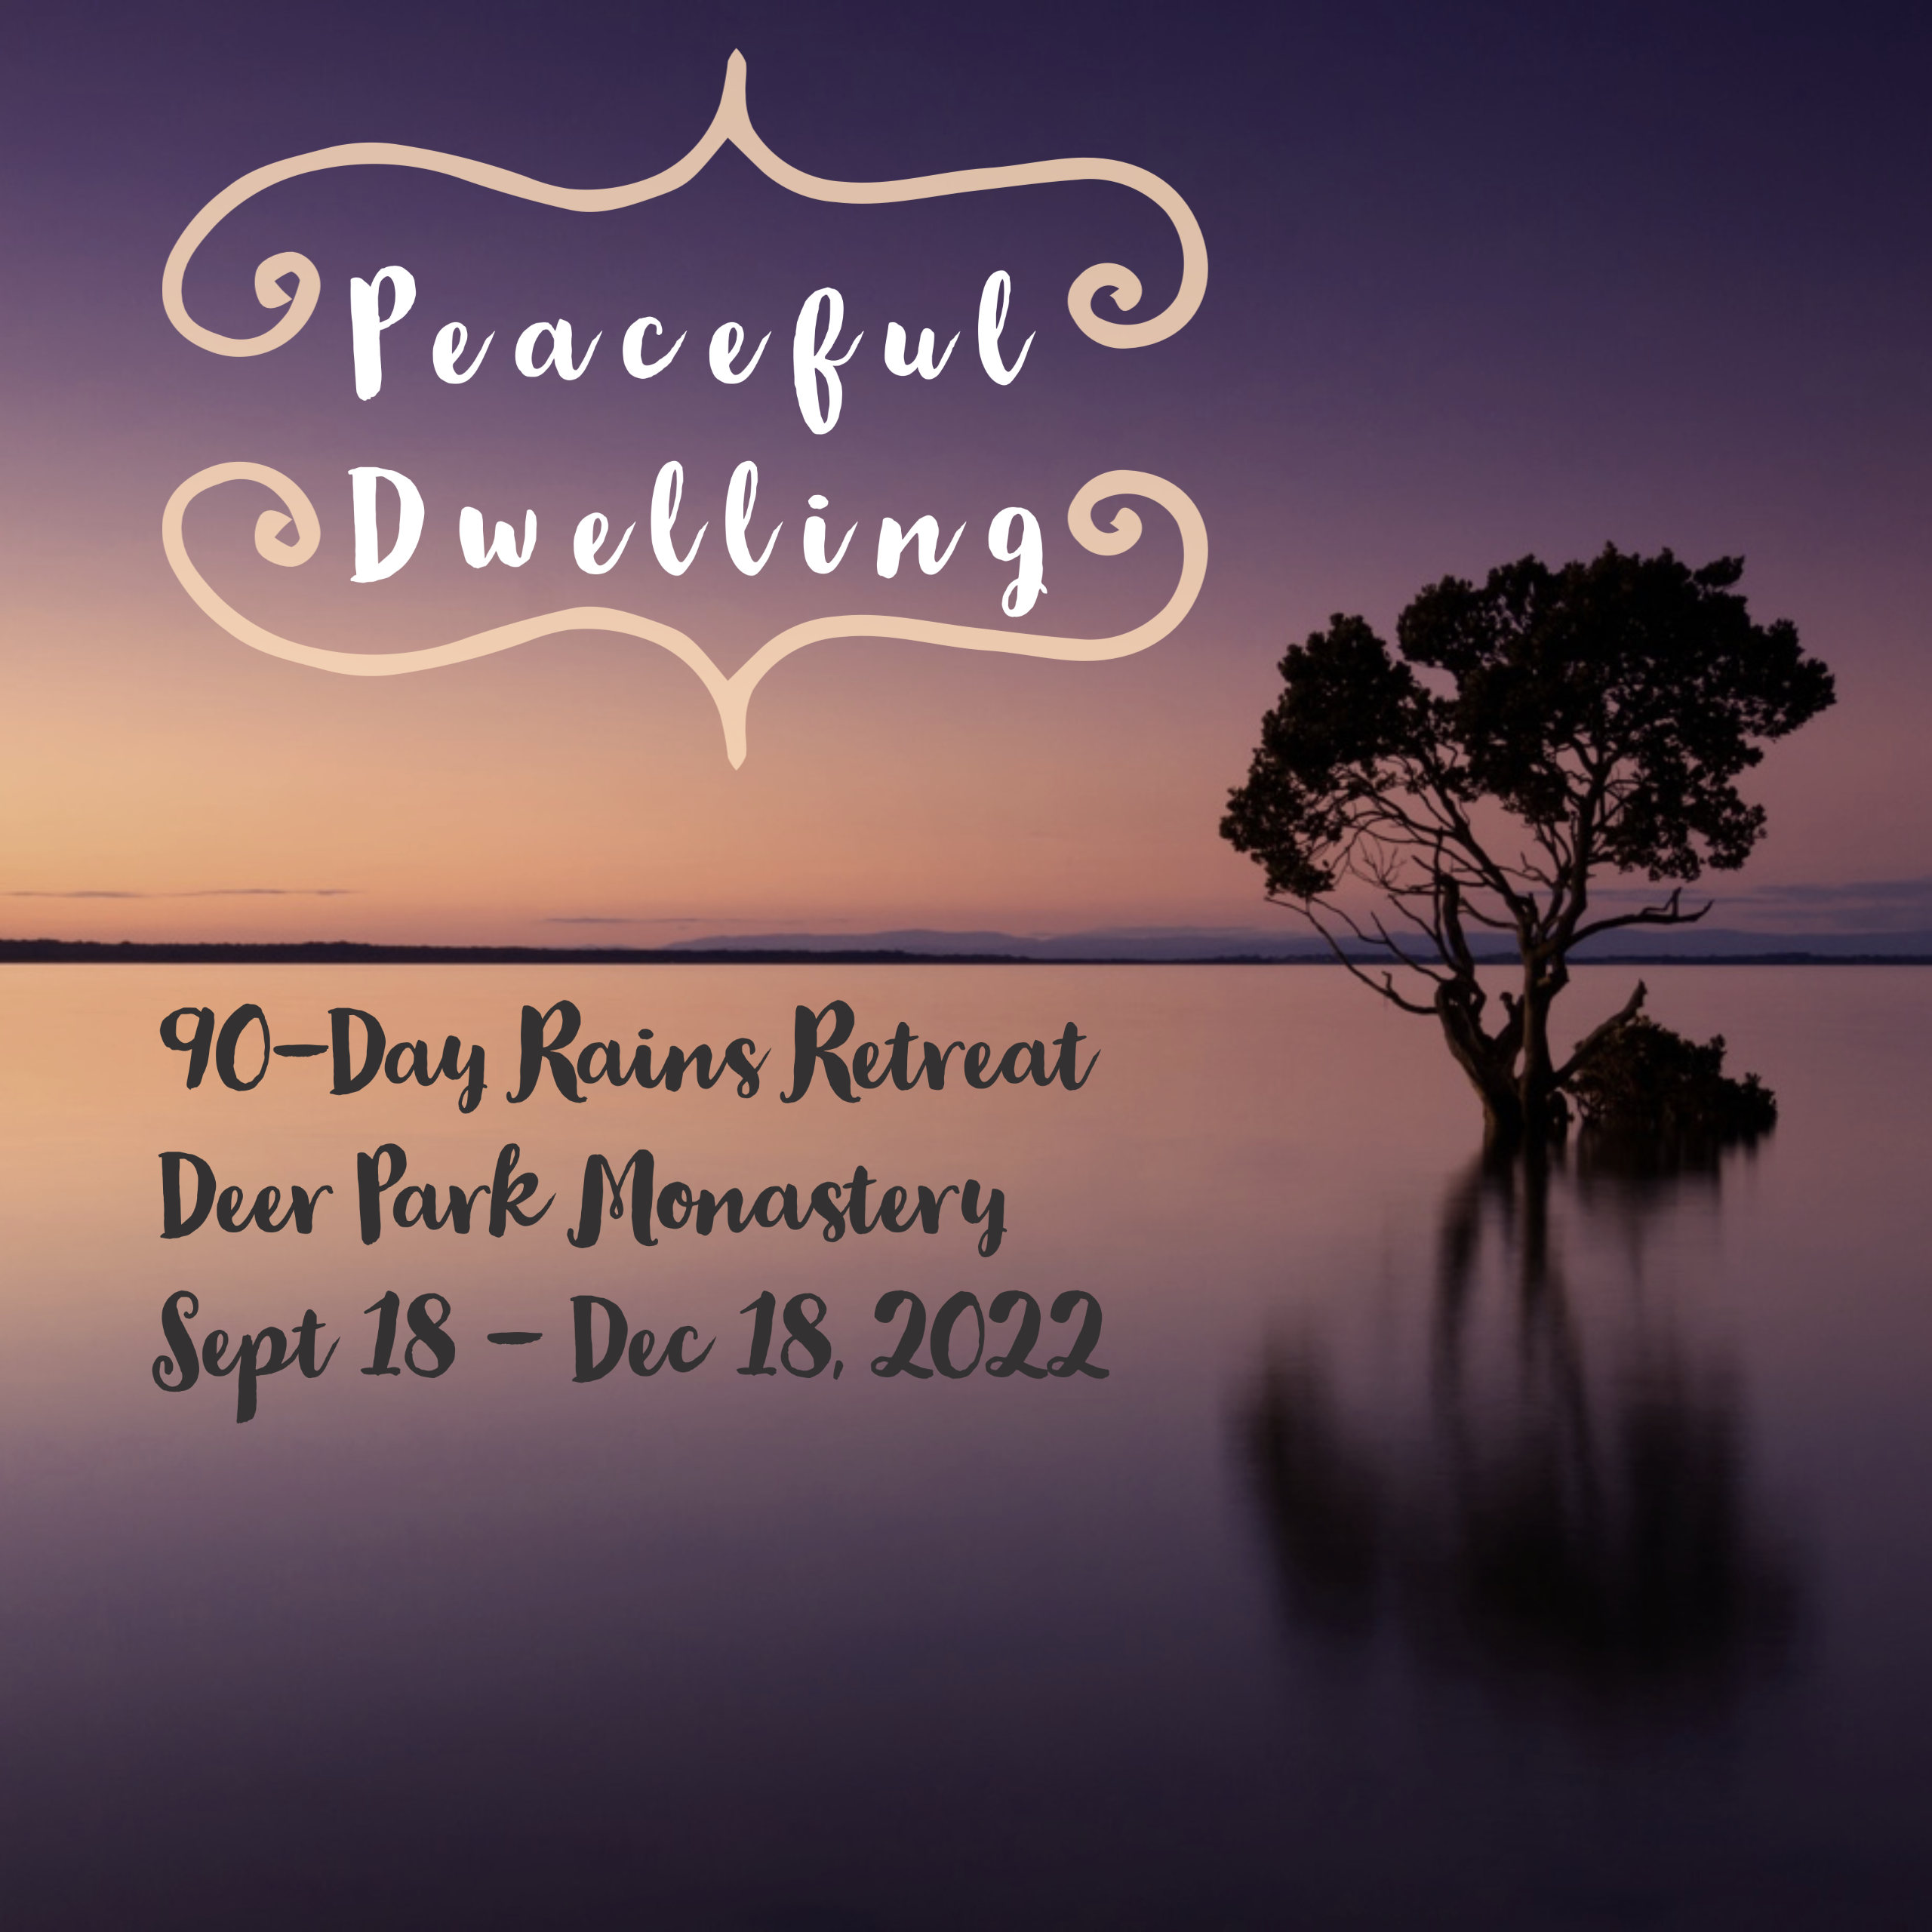 Peaceful Dwelling: 90-Day Retreat